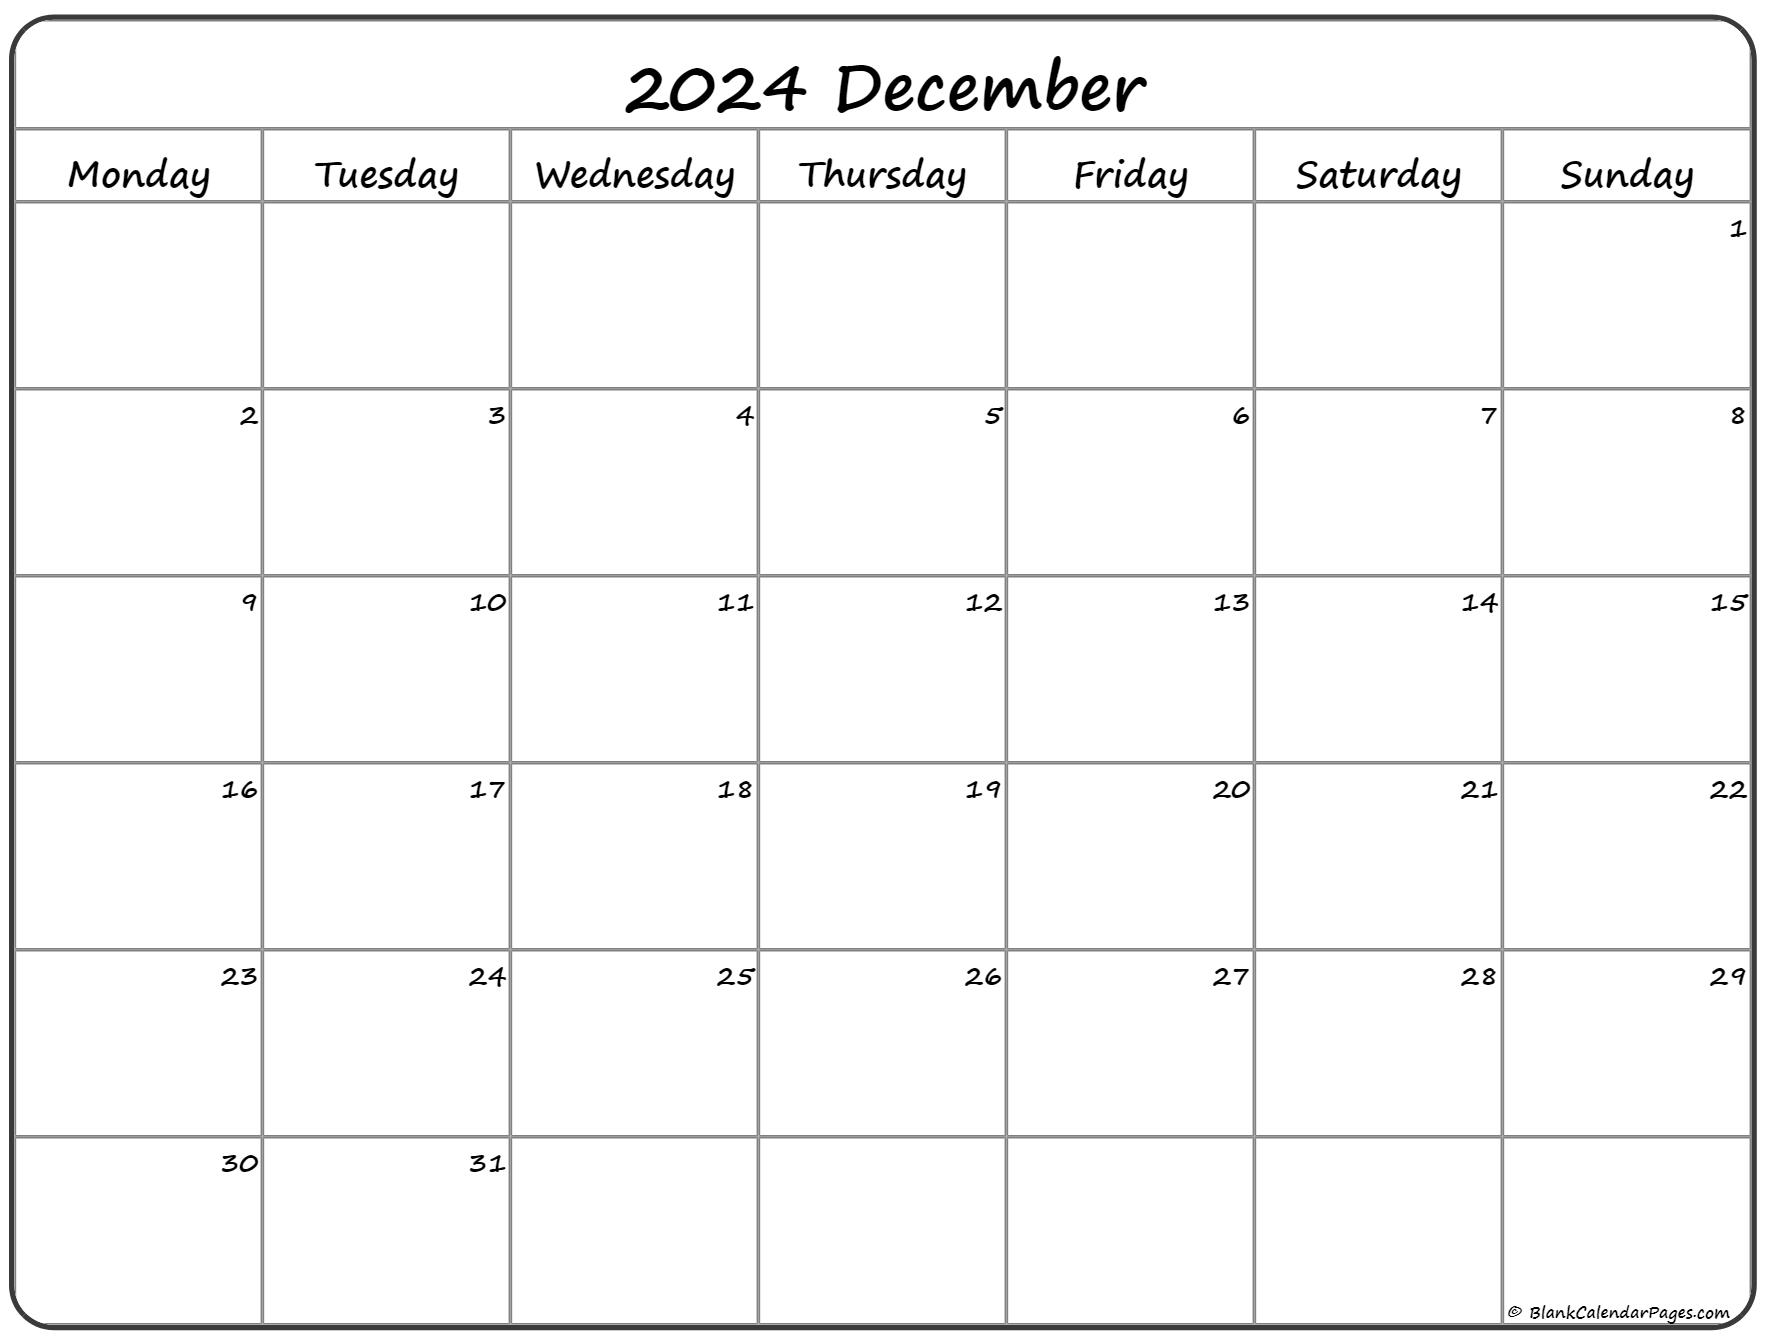 december-2022-monday-calendar-monday-to-sunday